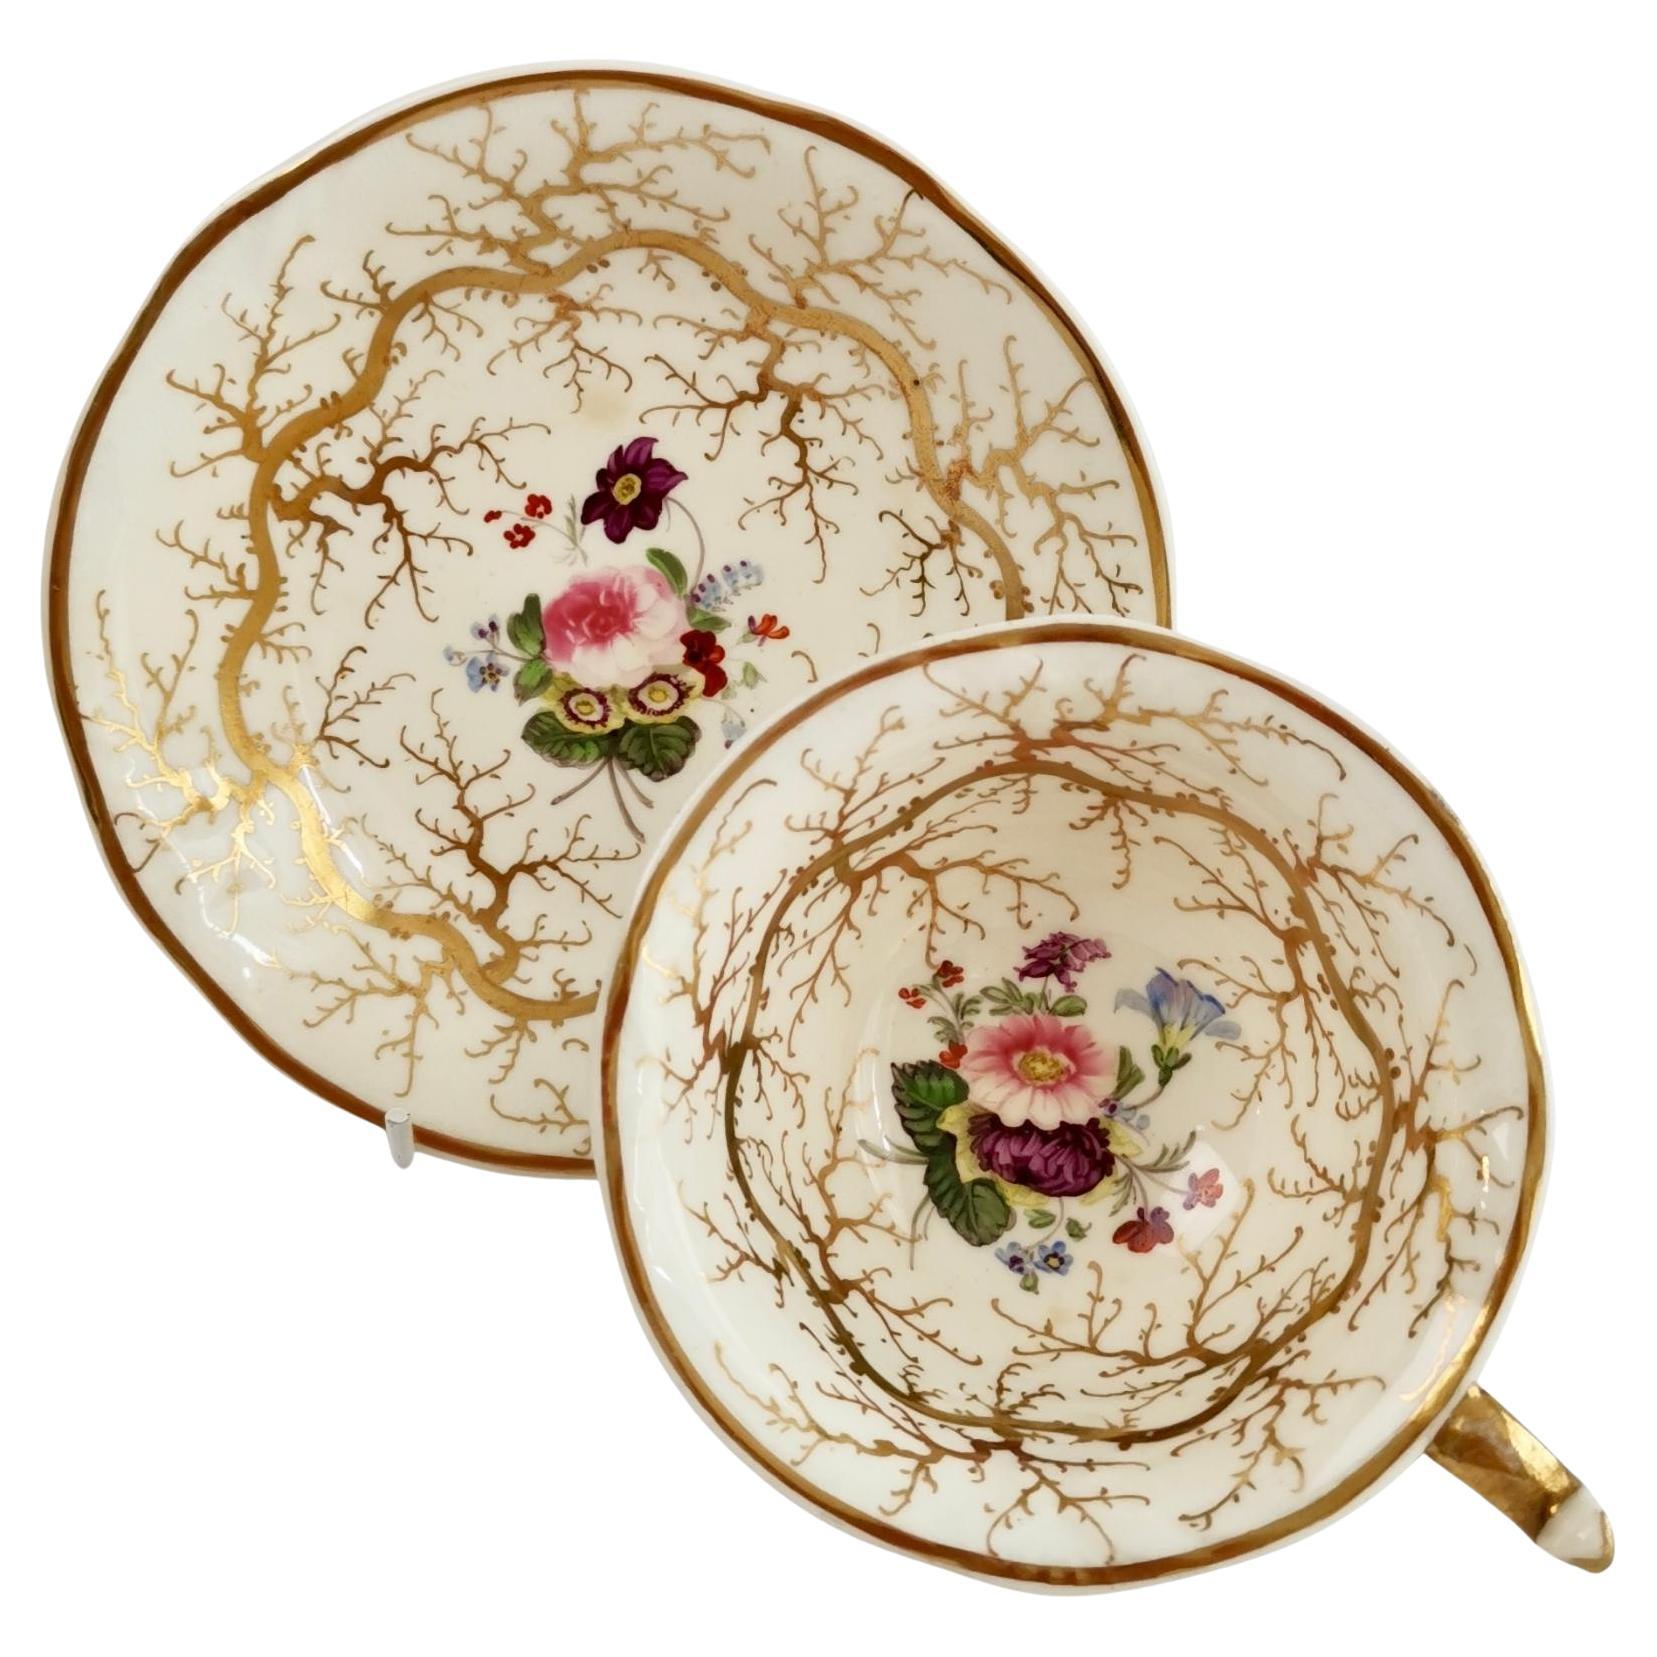 Rockingham Porcelain Teacup, Gilt Seaweed, Flowers, Rococo Revival, 1832